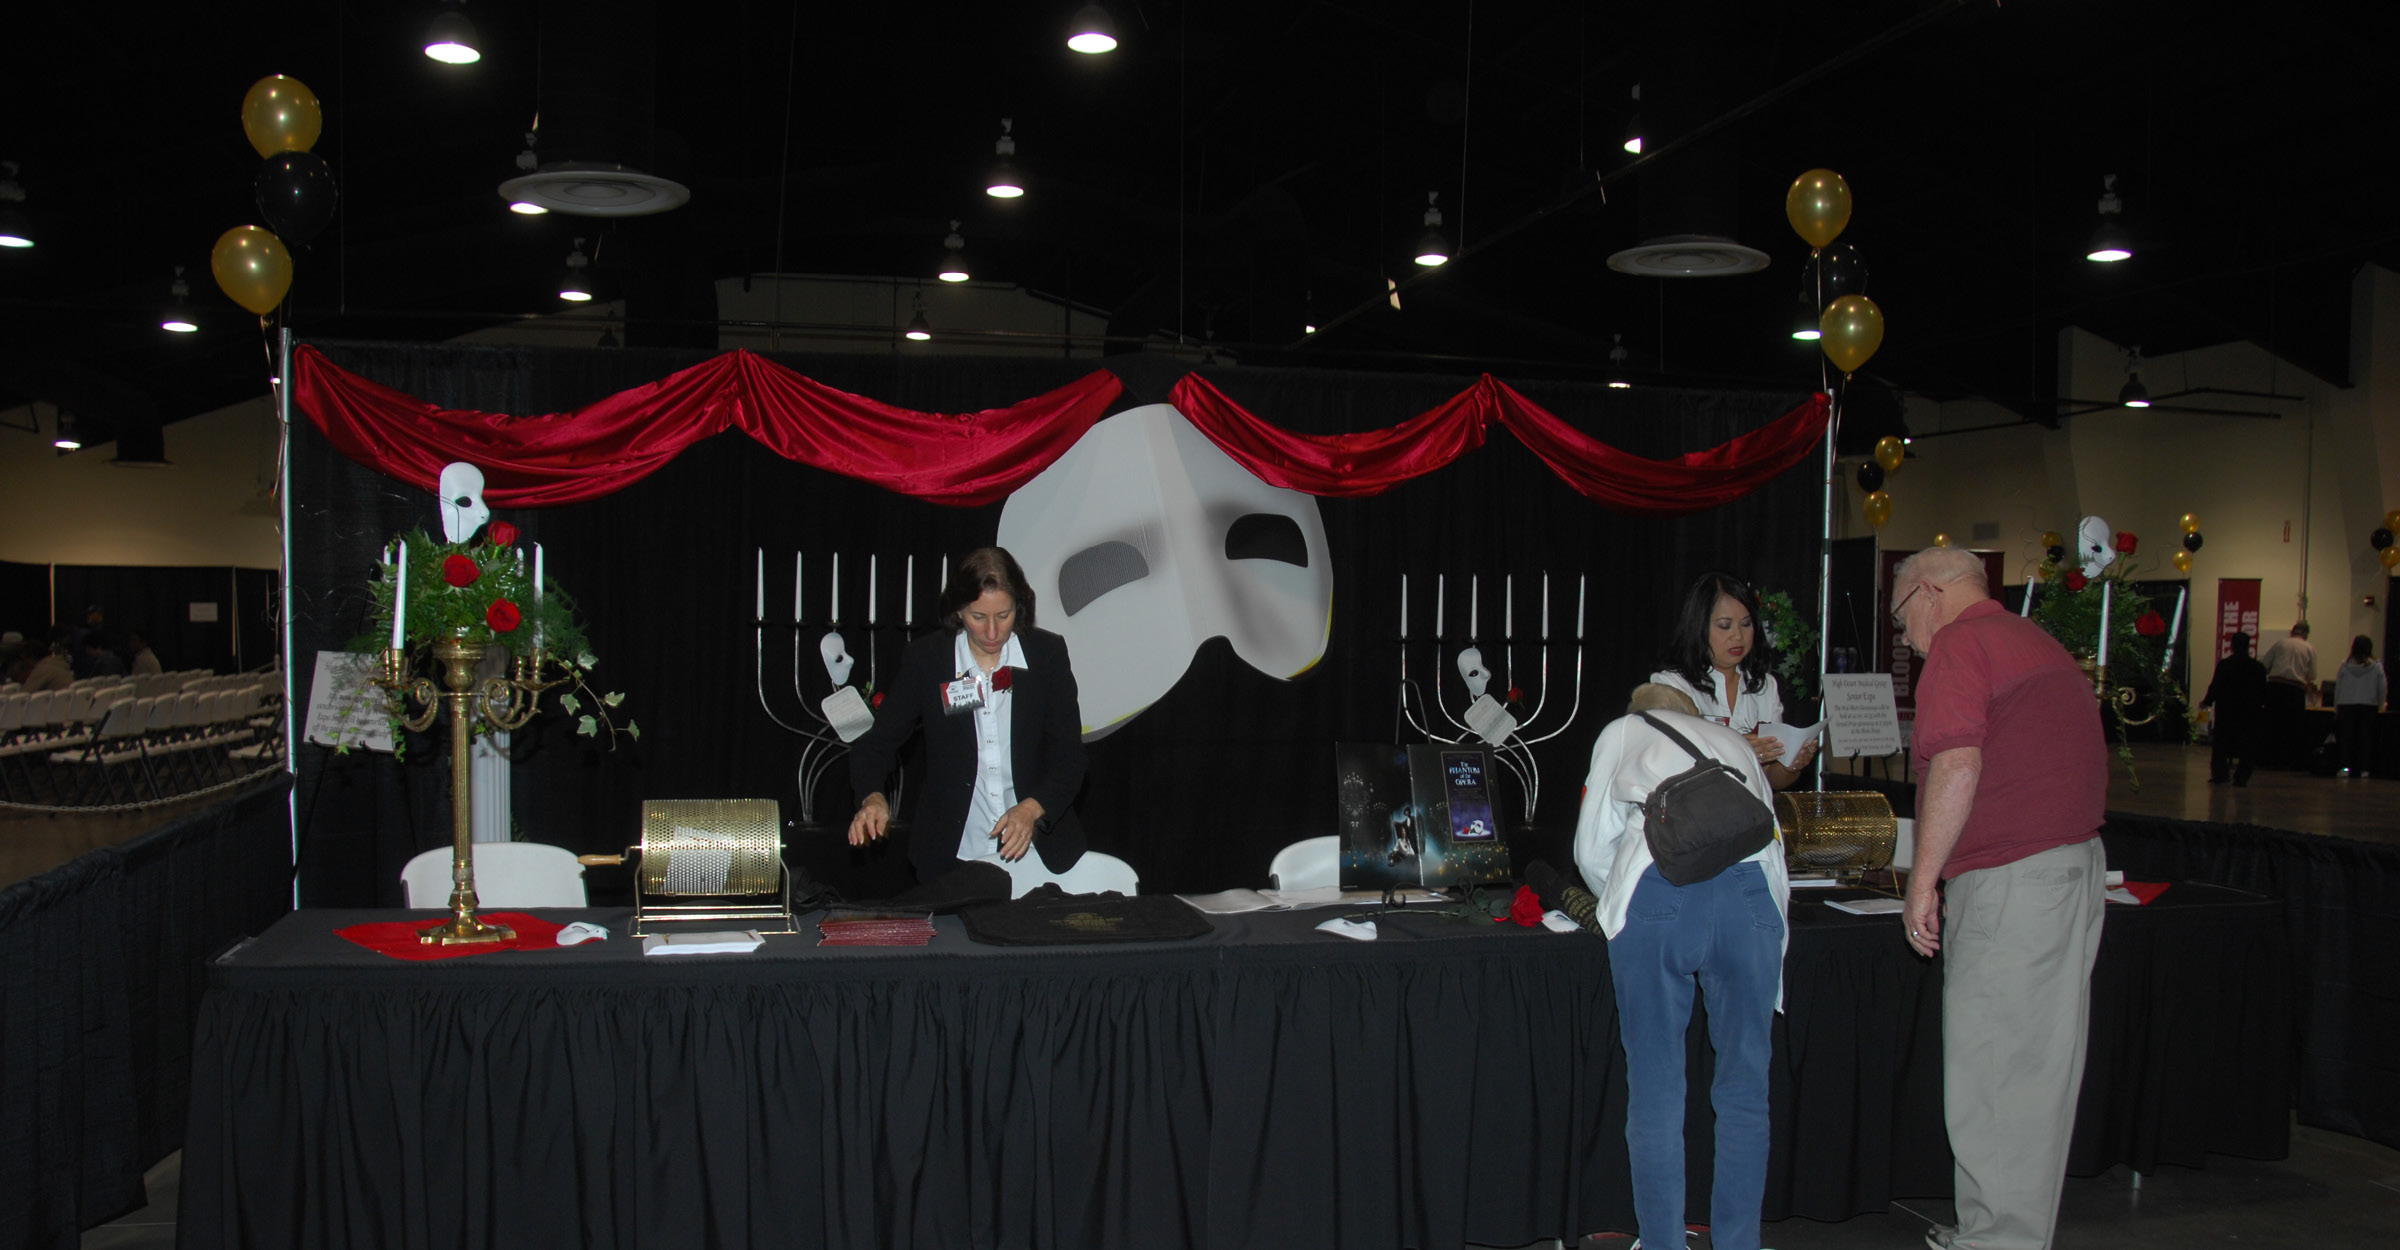 Phantom of the Opera Welcome Booth